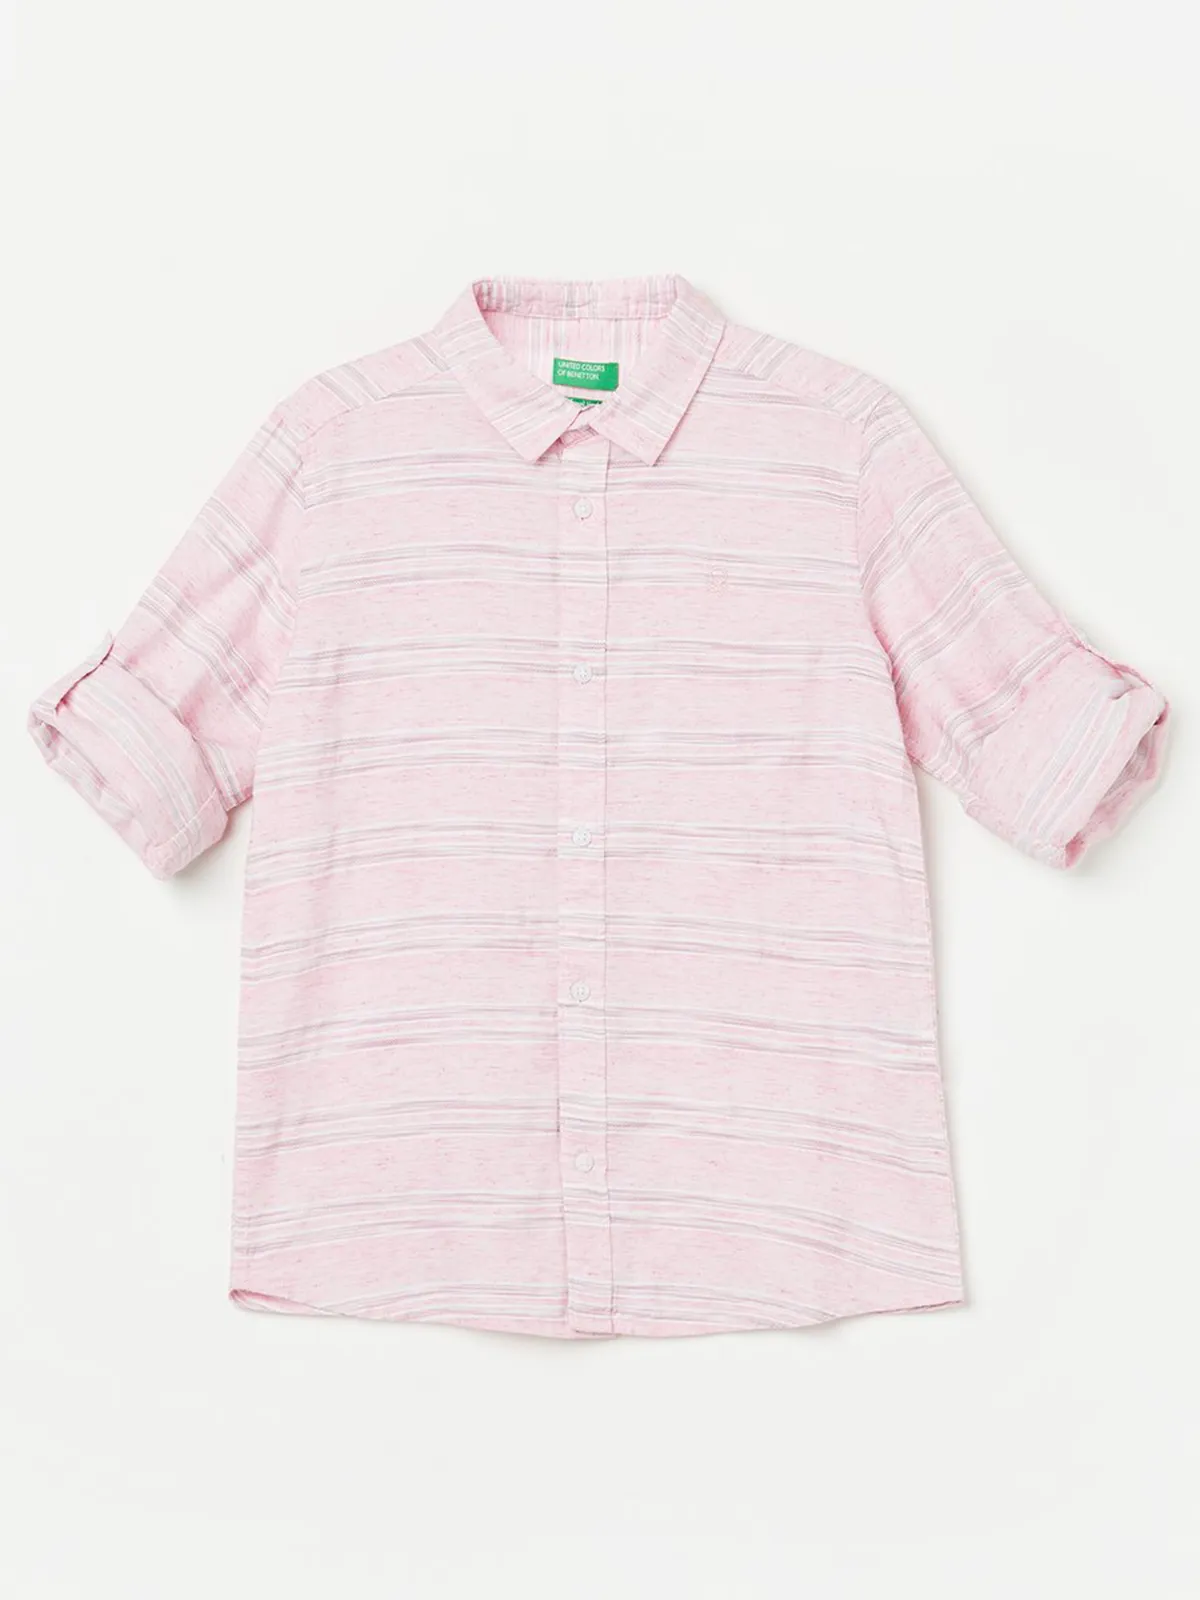 UCB light pink stripe cotton shirt